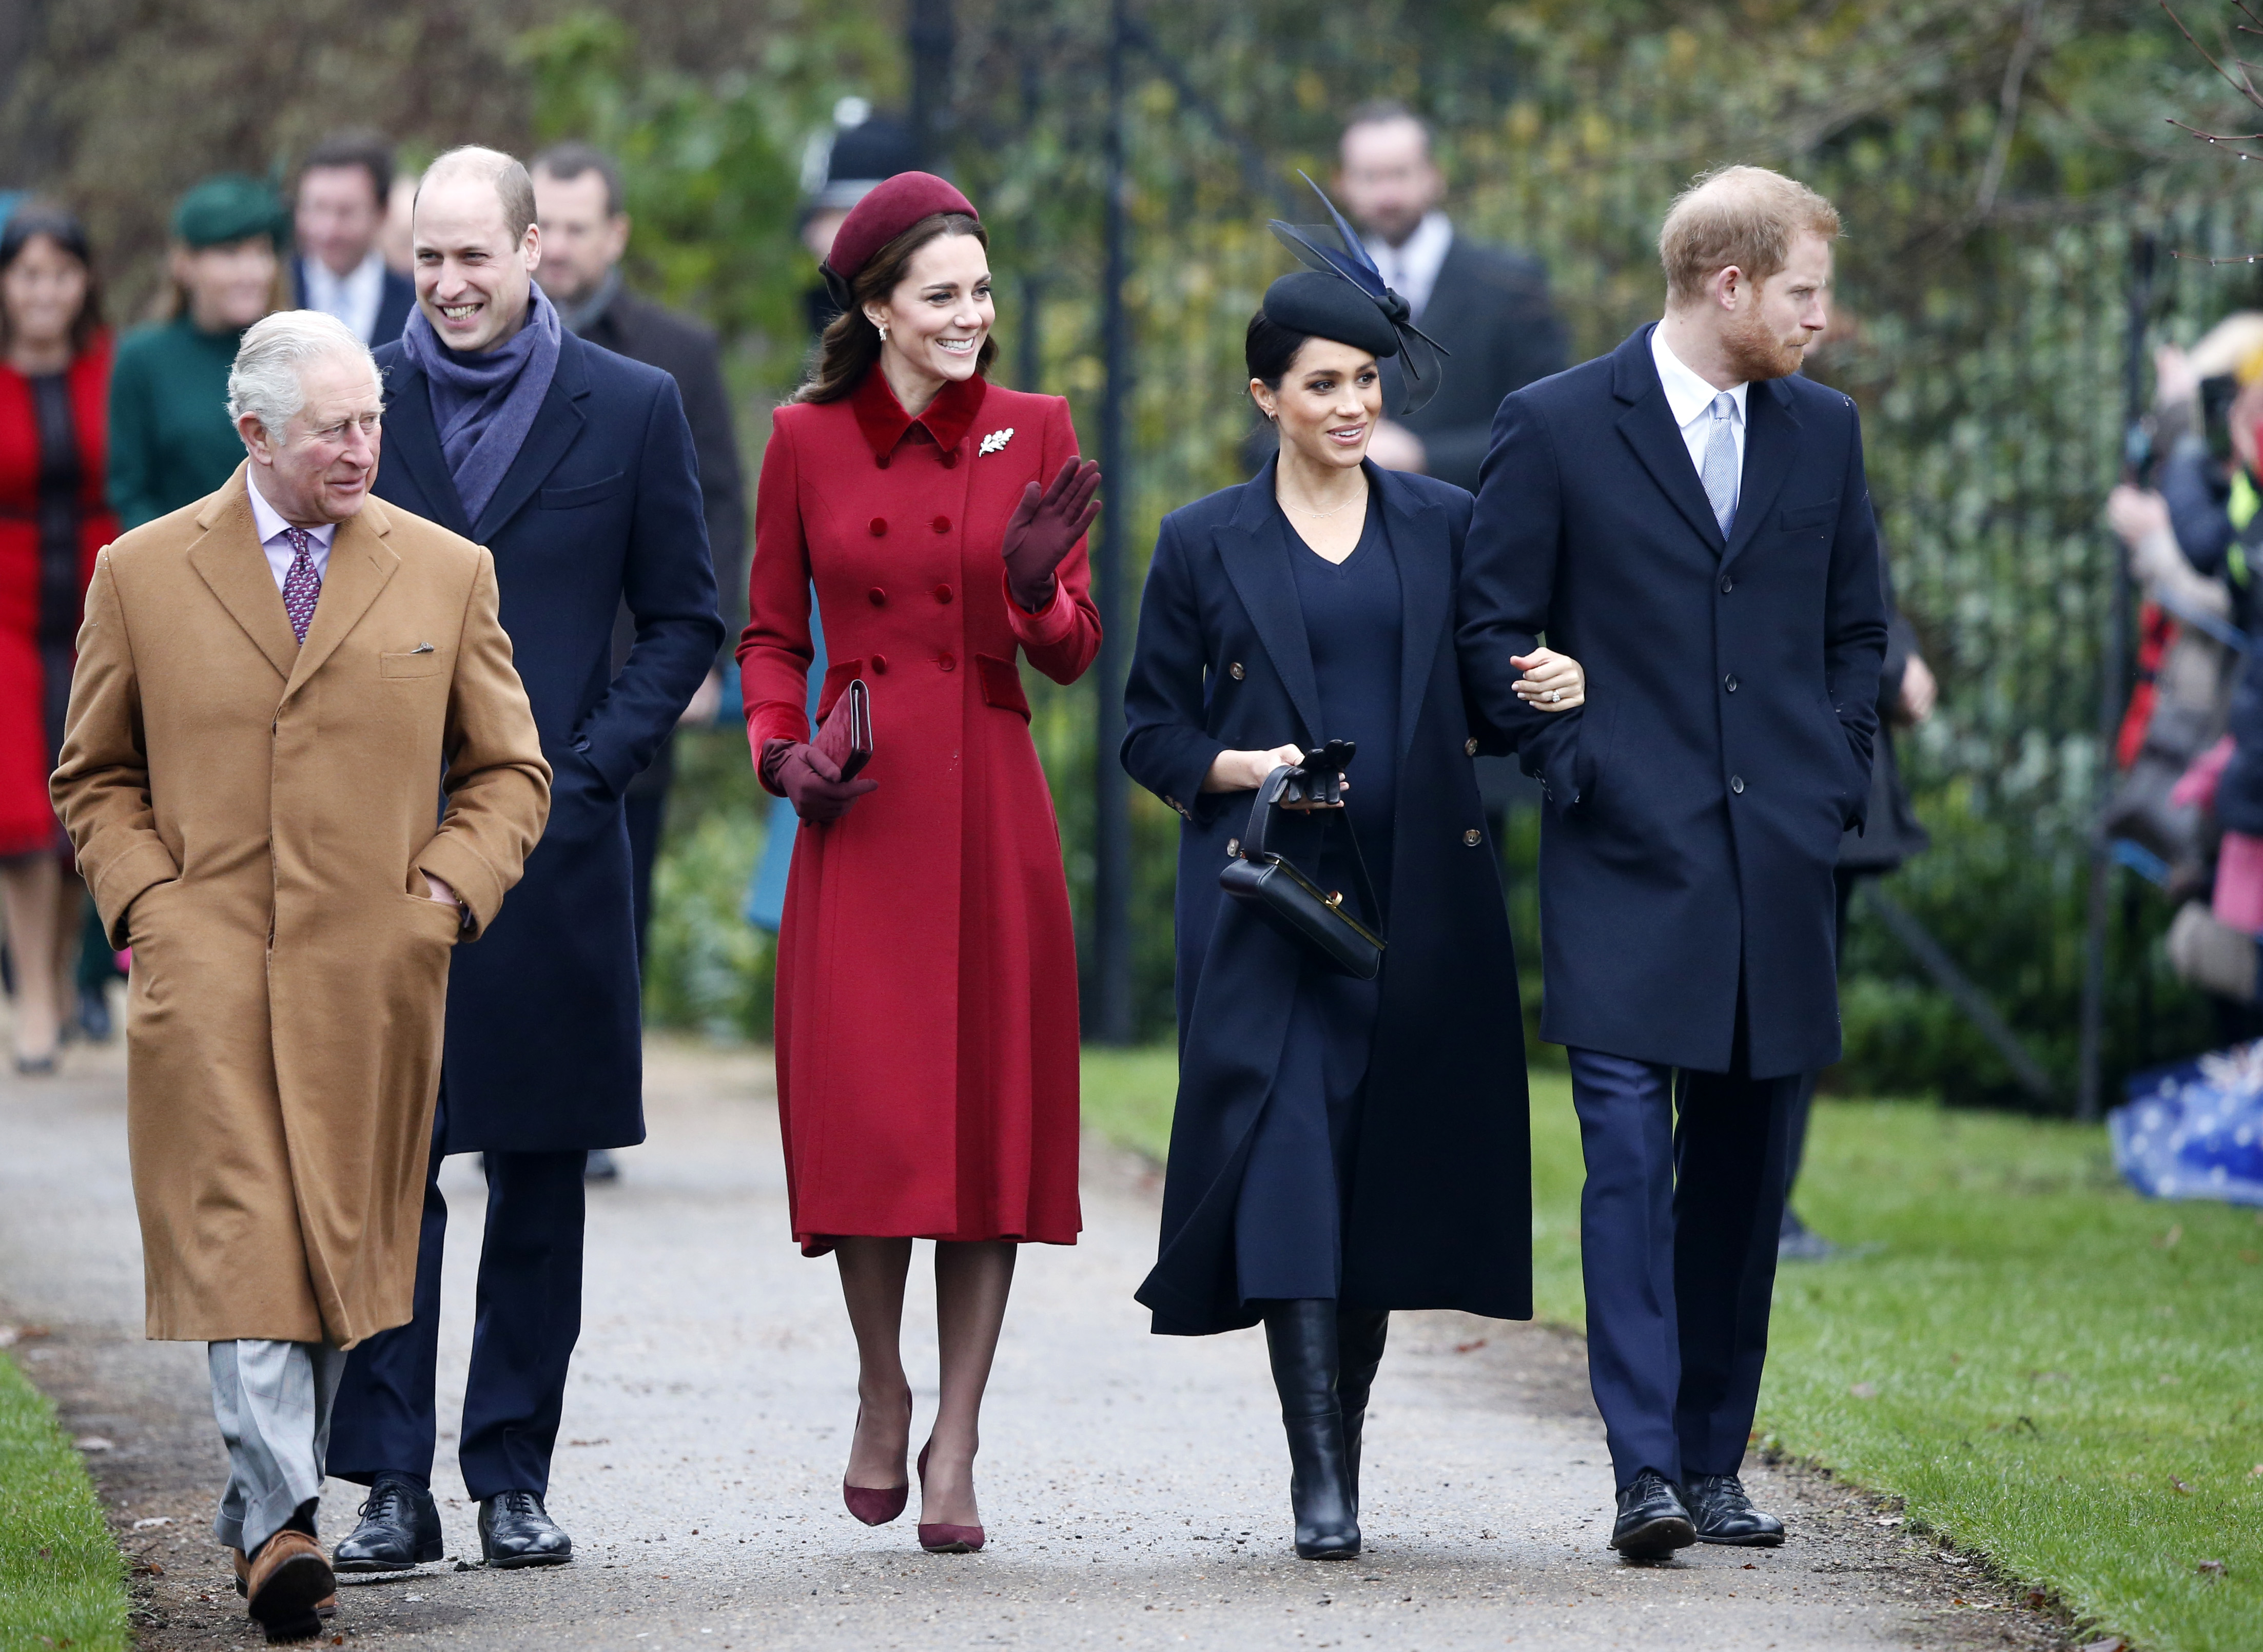 Kate Middleton â€“ Heading to Christmas Day Church service in Sandringham